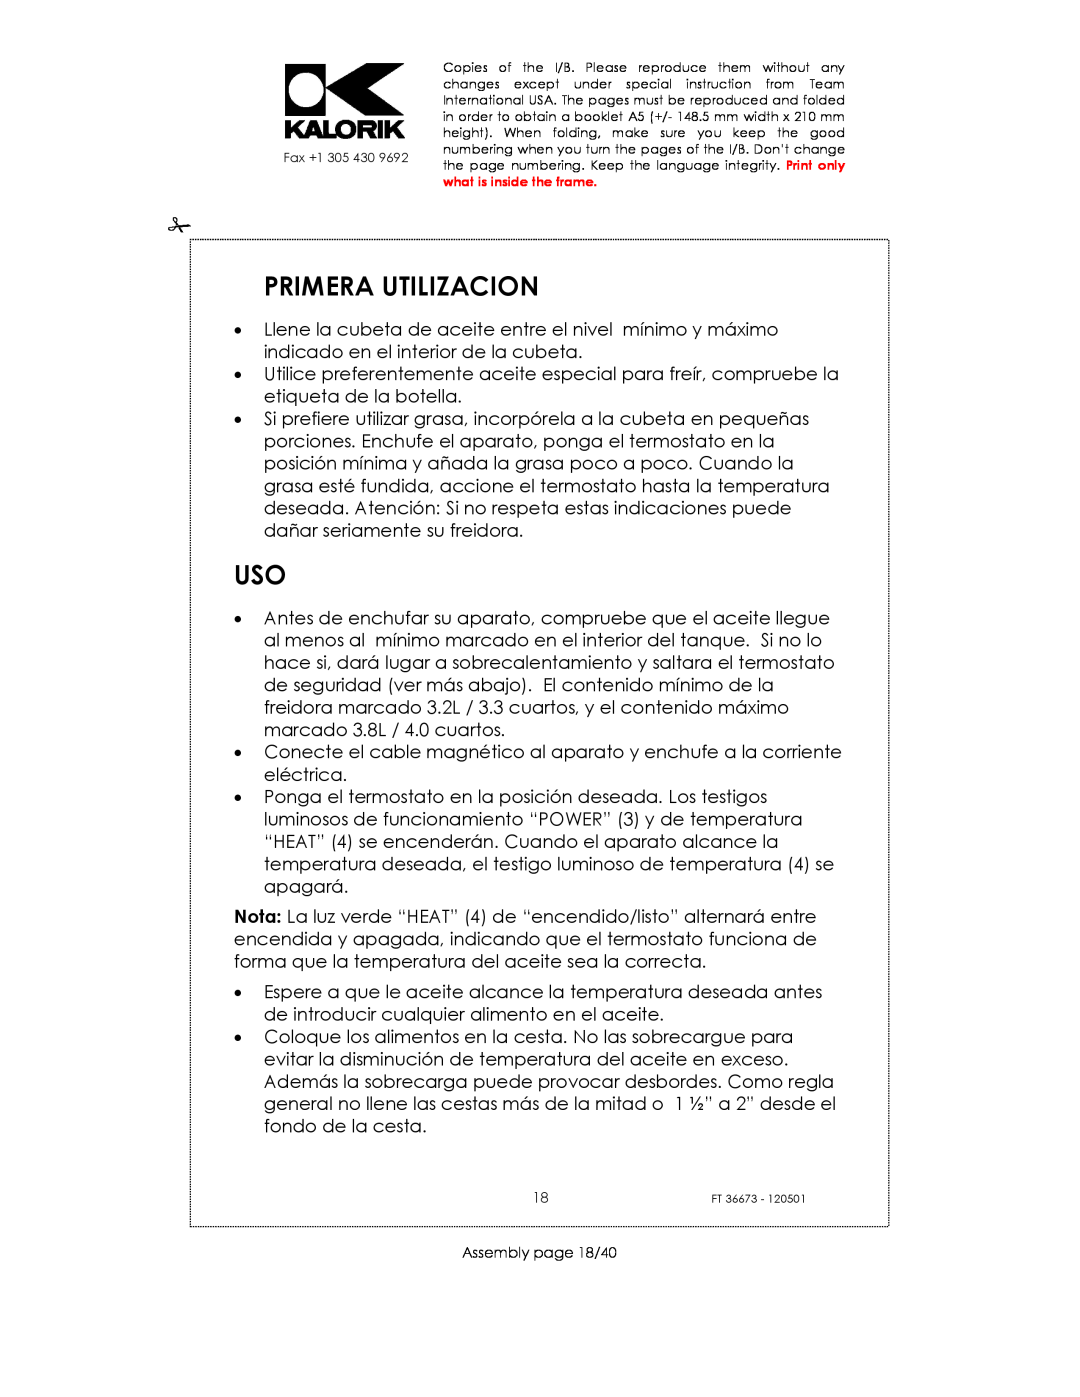 Kalorik USK FT 36673 manual Primera Utilizacion, Assembly page 18/40 